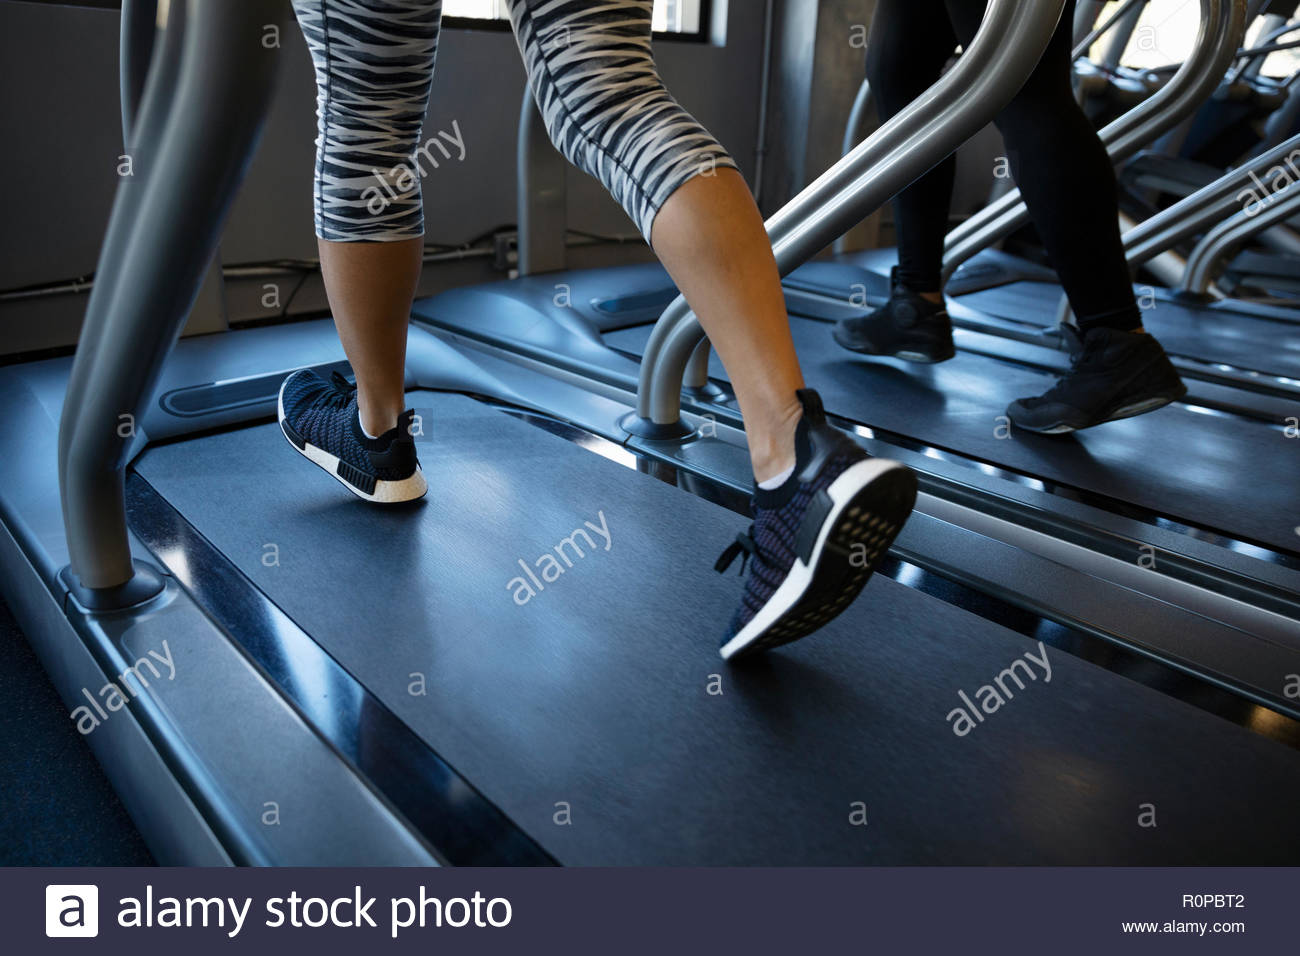 Legs of woman walking on treadmill in gym Stock Photo